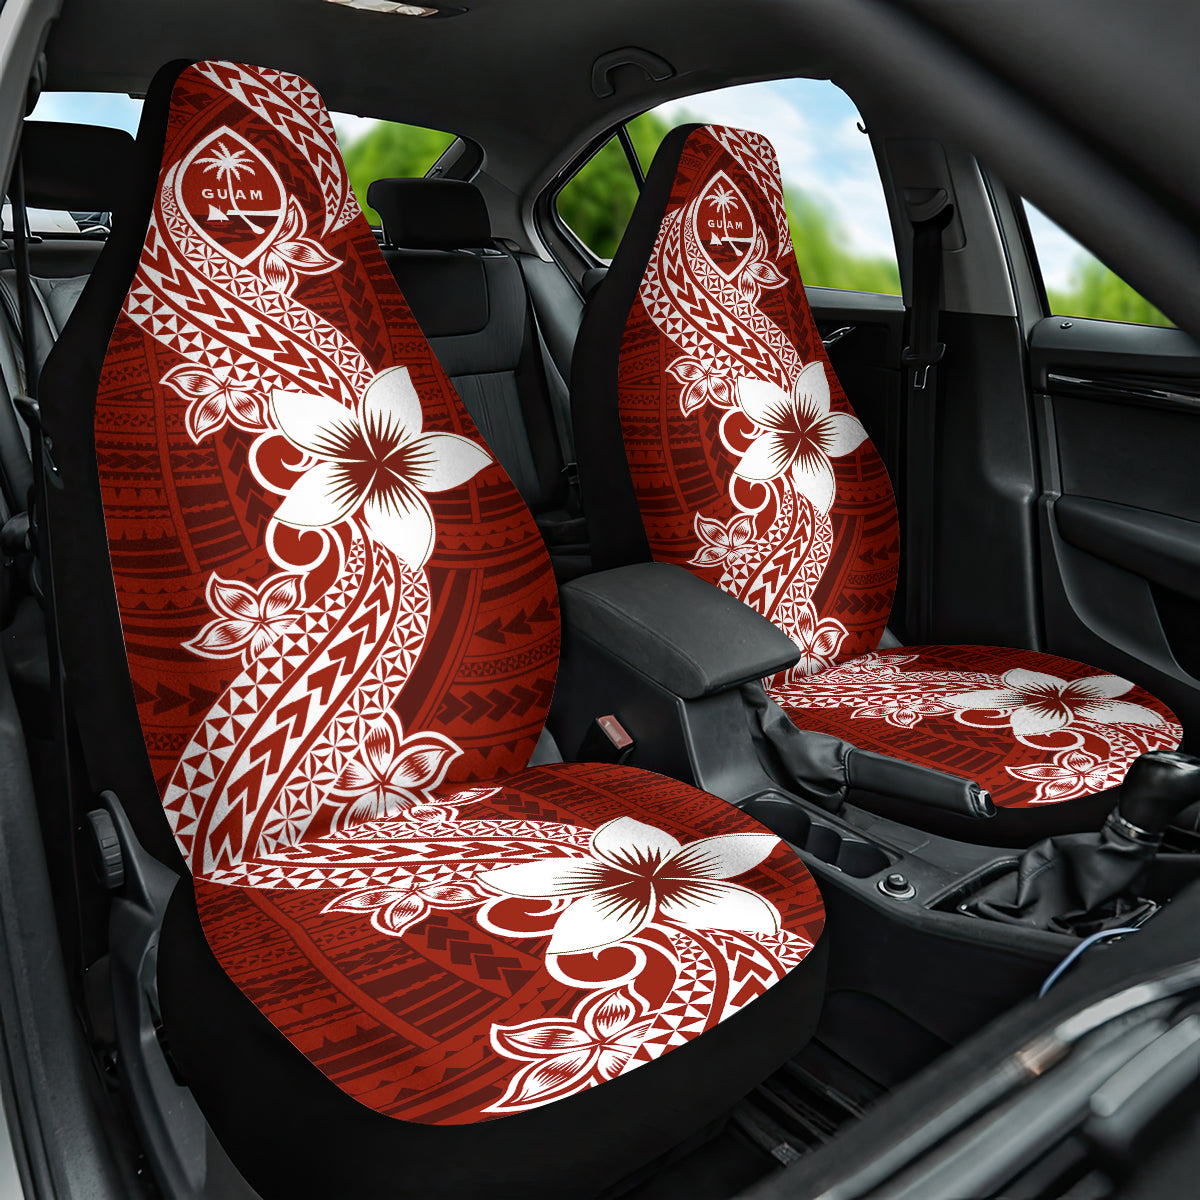 Hafa Adai Guam Car Seat Cover Polynesian Floral Red Pattern LT01 One Size Red - Polynesian Pride